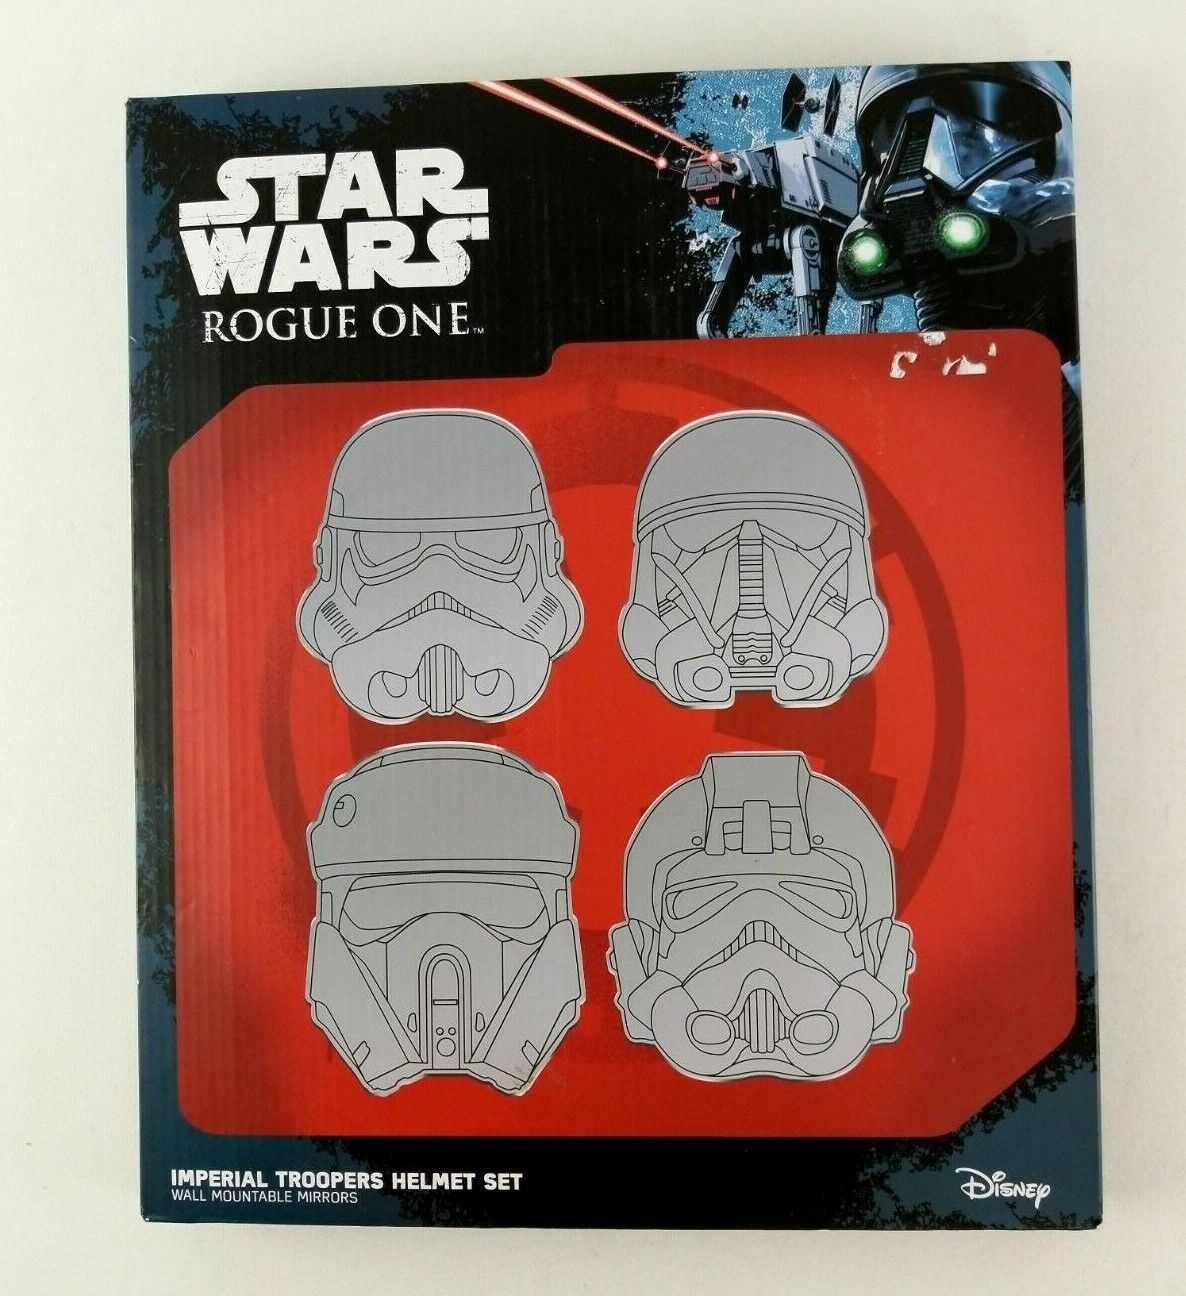 Star Wars Rogue One Imperial Troopers Helmet Mirror Set Wall Mount